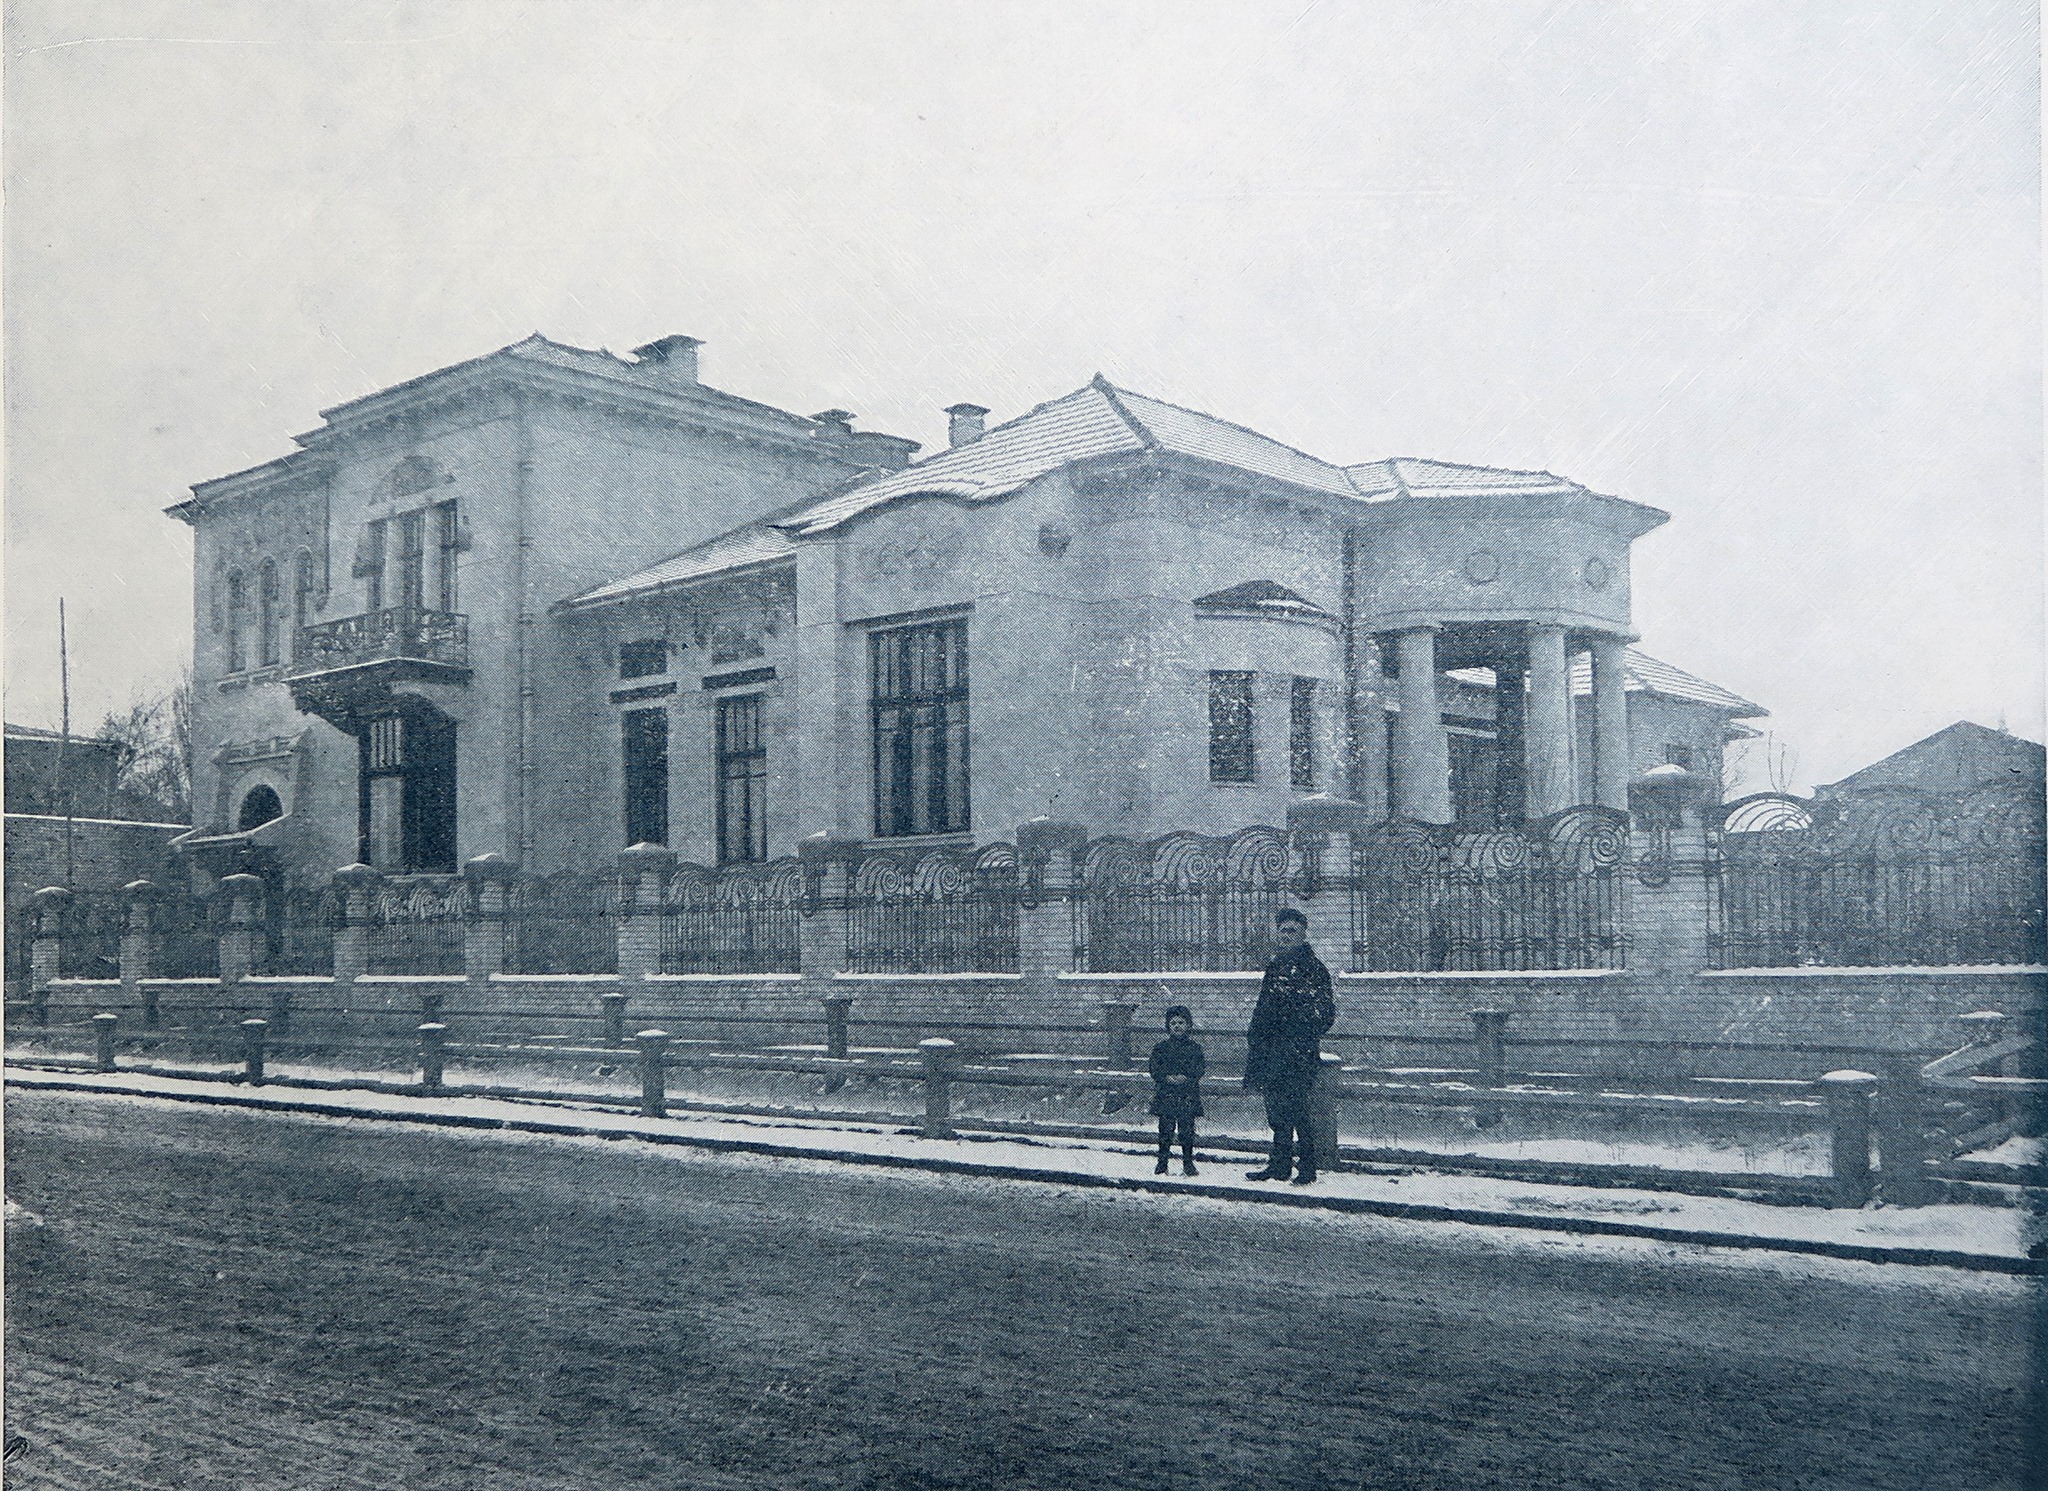 Reineke house in Saratov circa 1910. Courtesy of the Saratov Project.